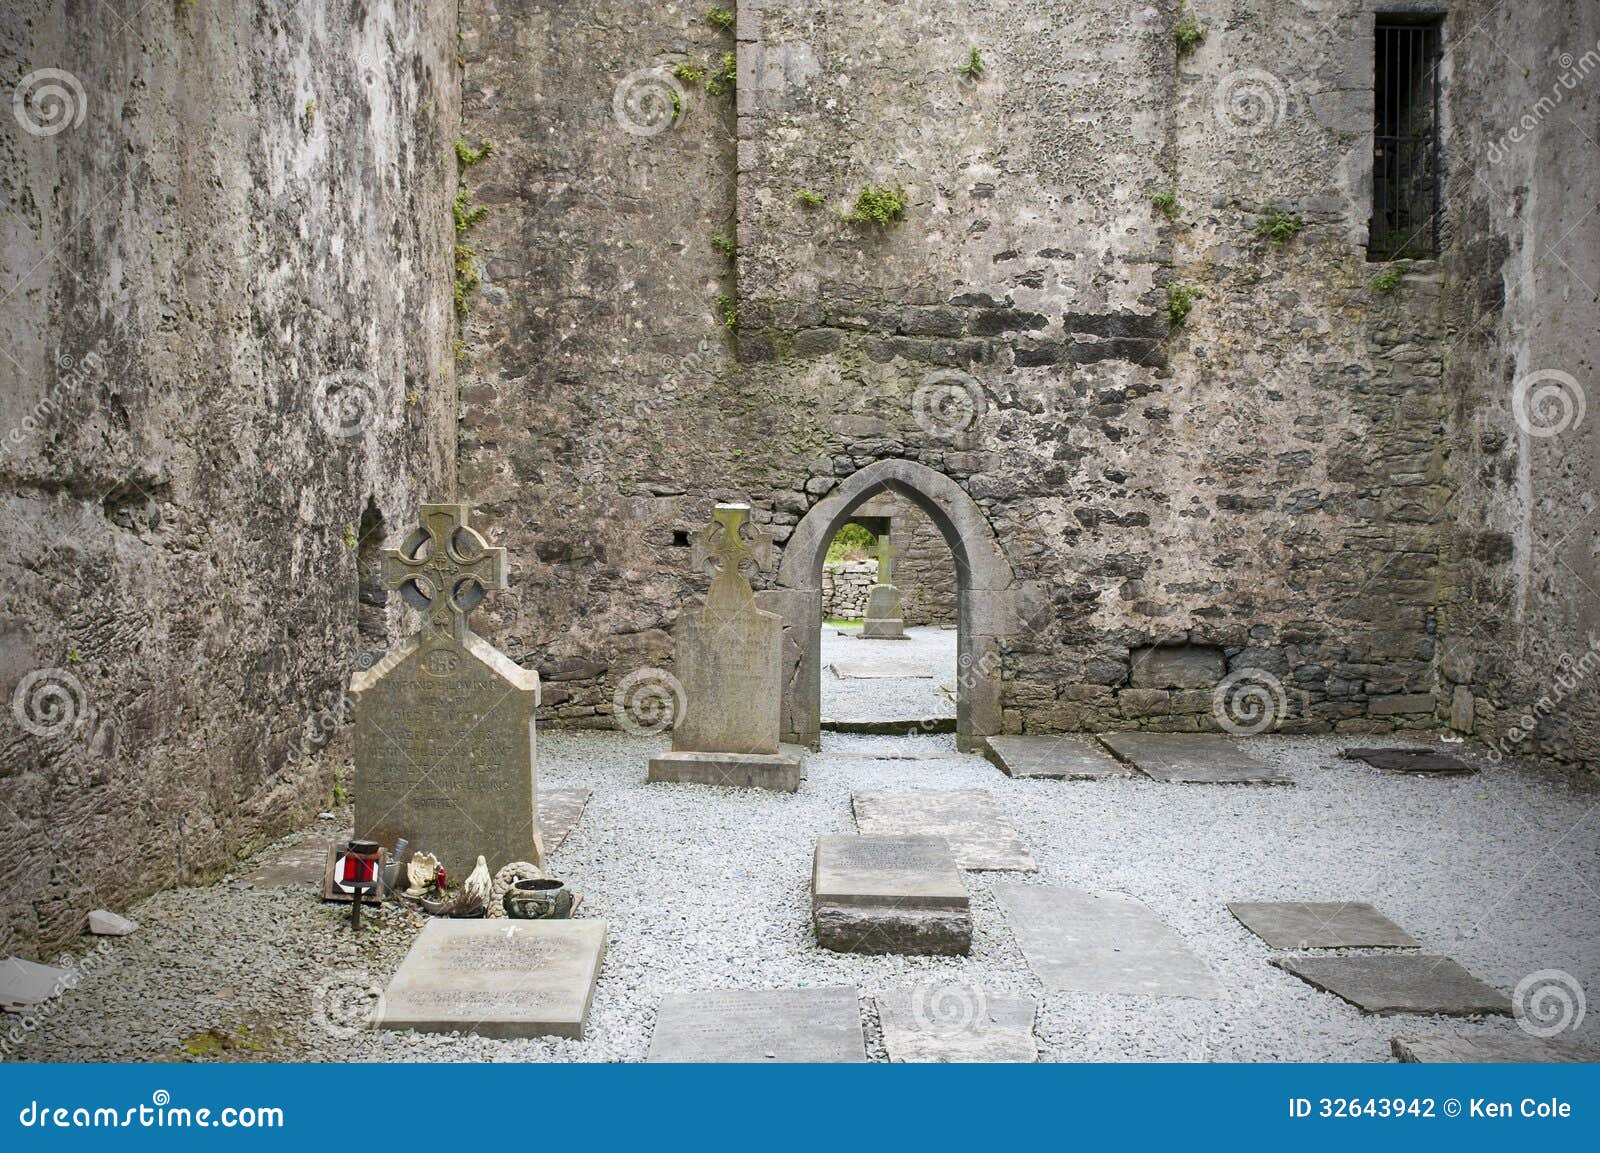 graves in irish abbey ruins